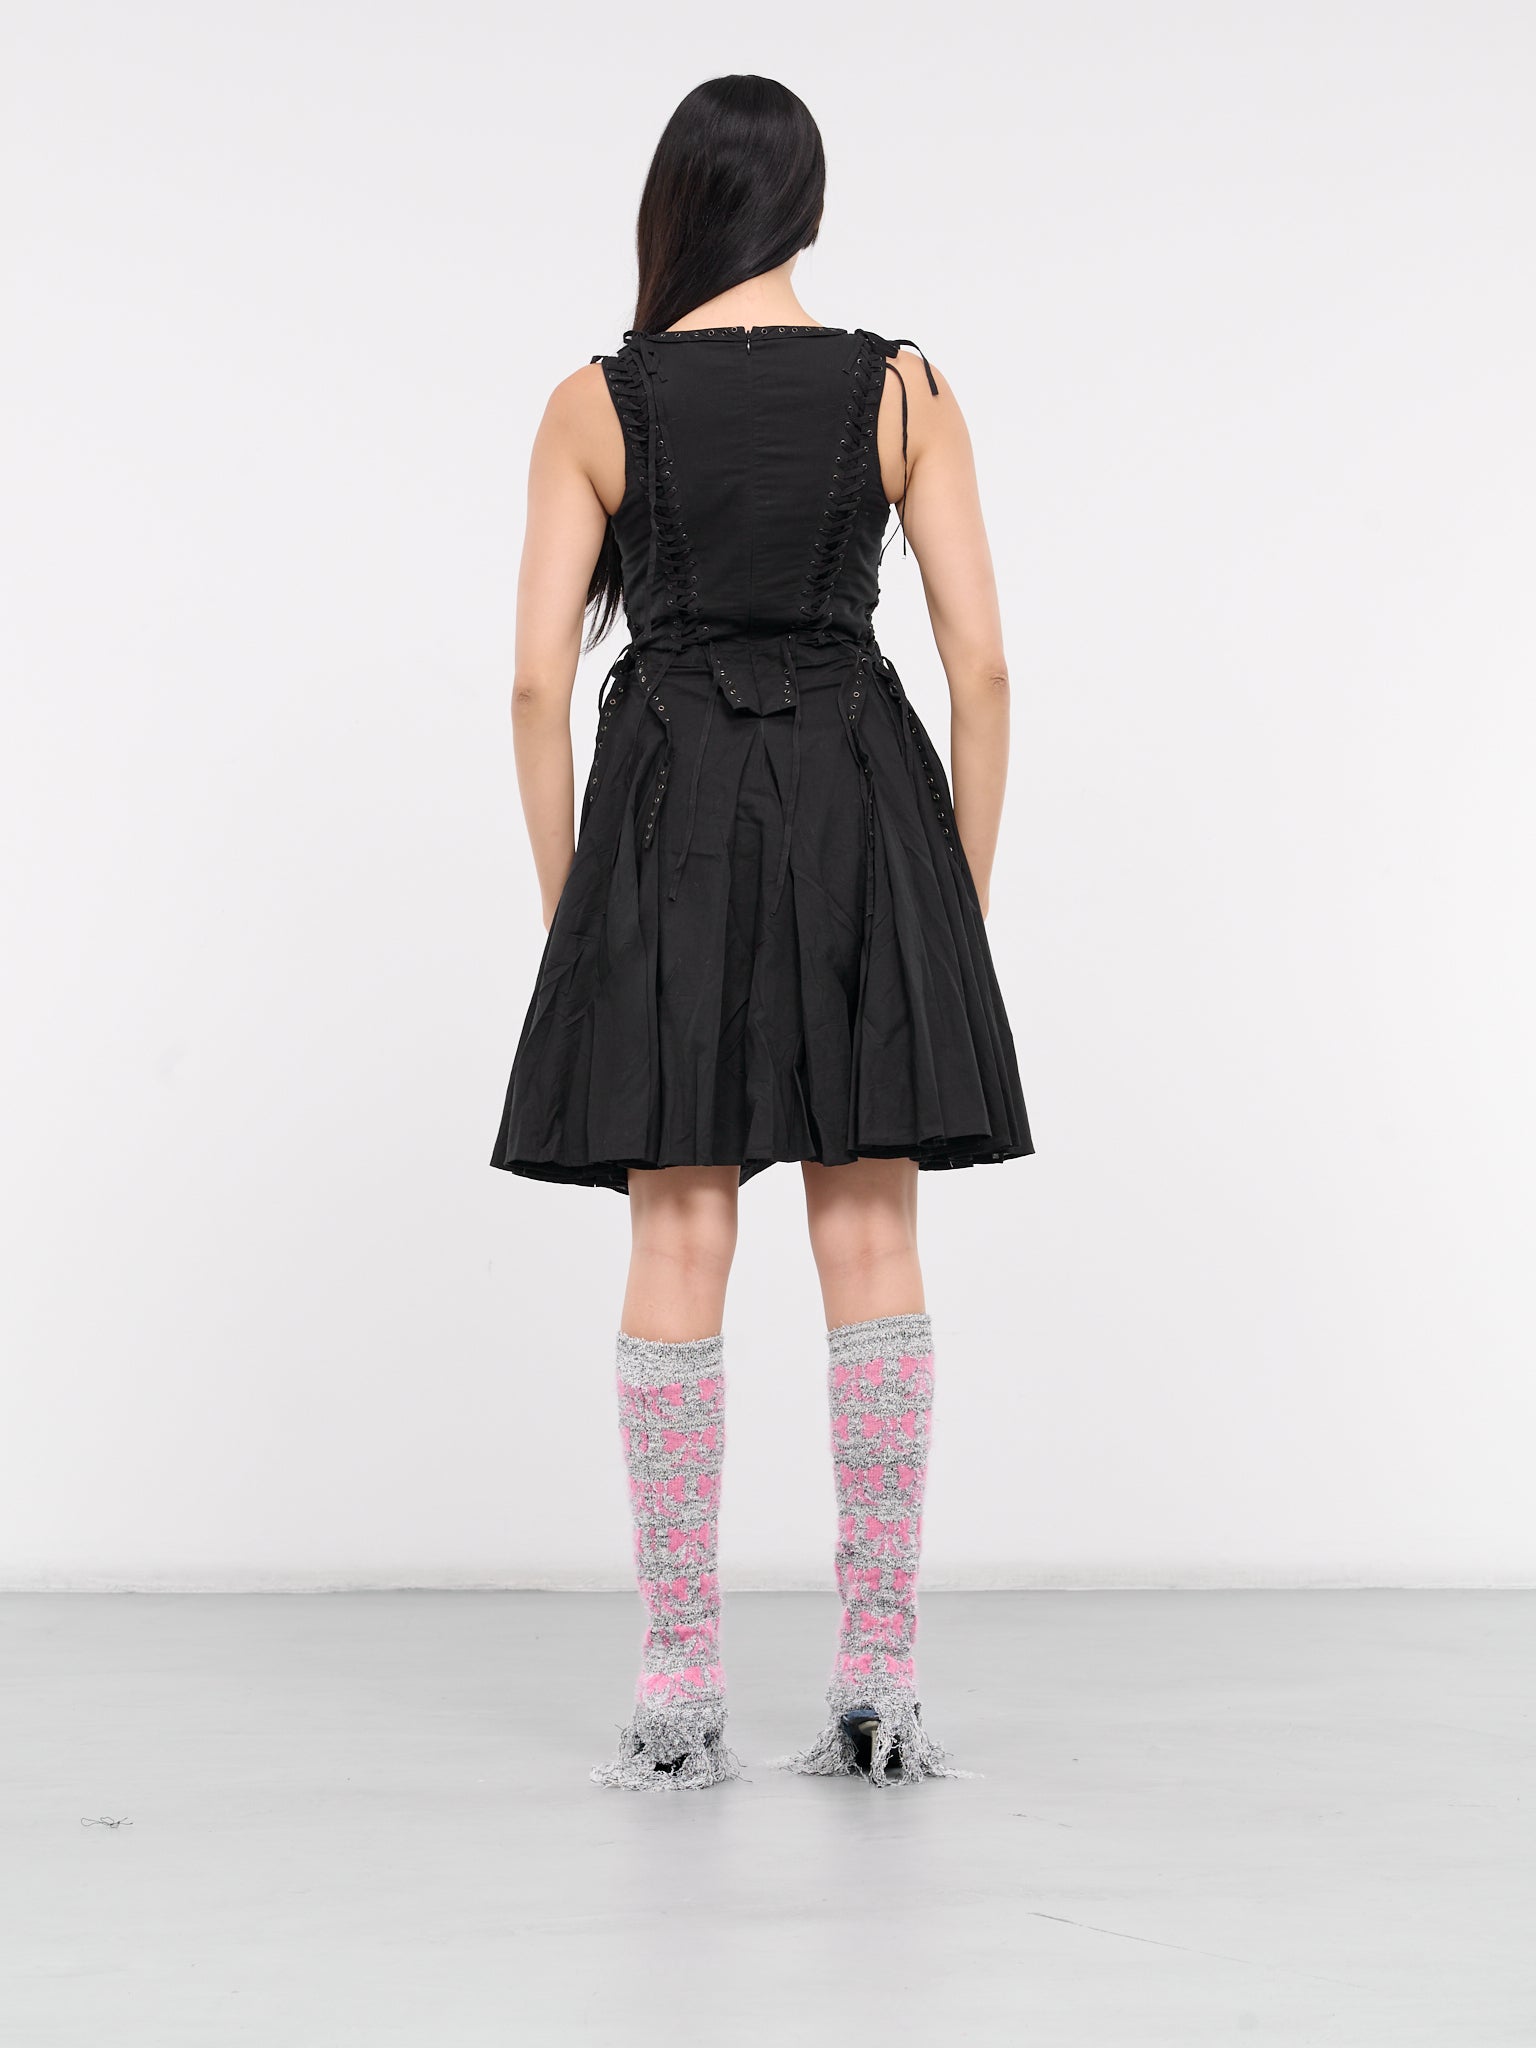 Lace-Up Dress (046-BLACK)